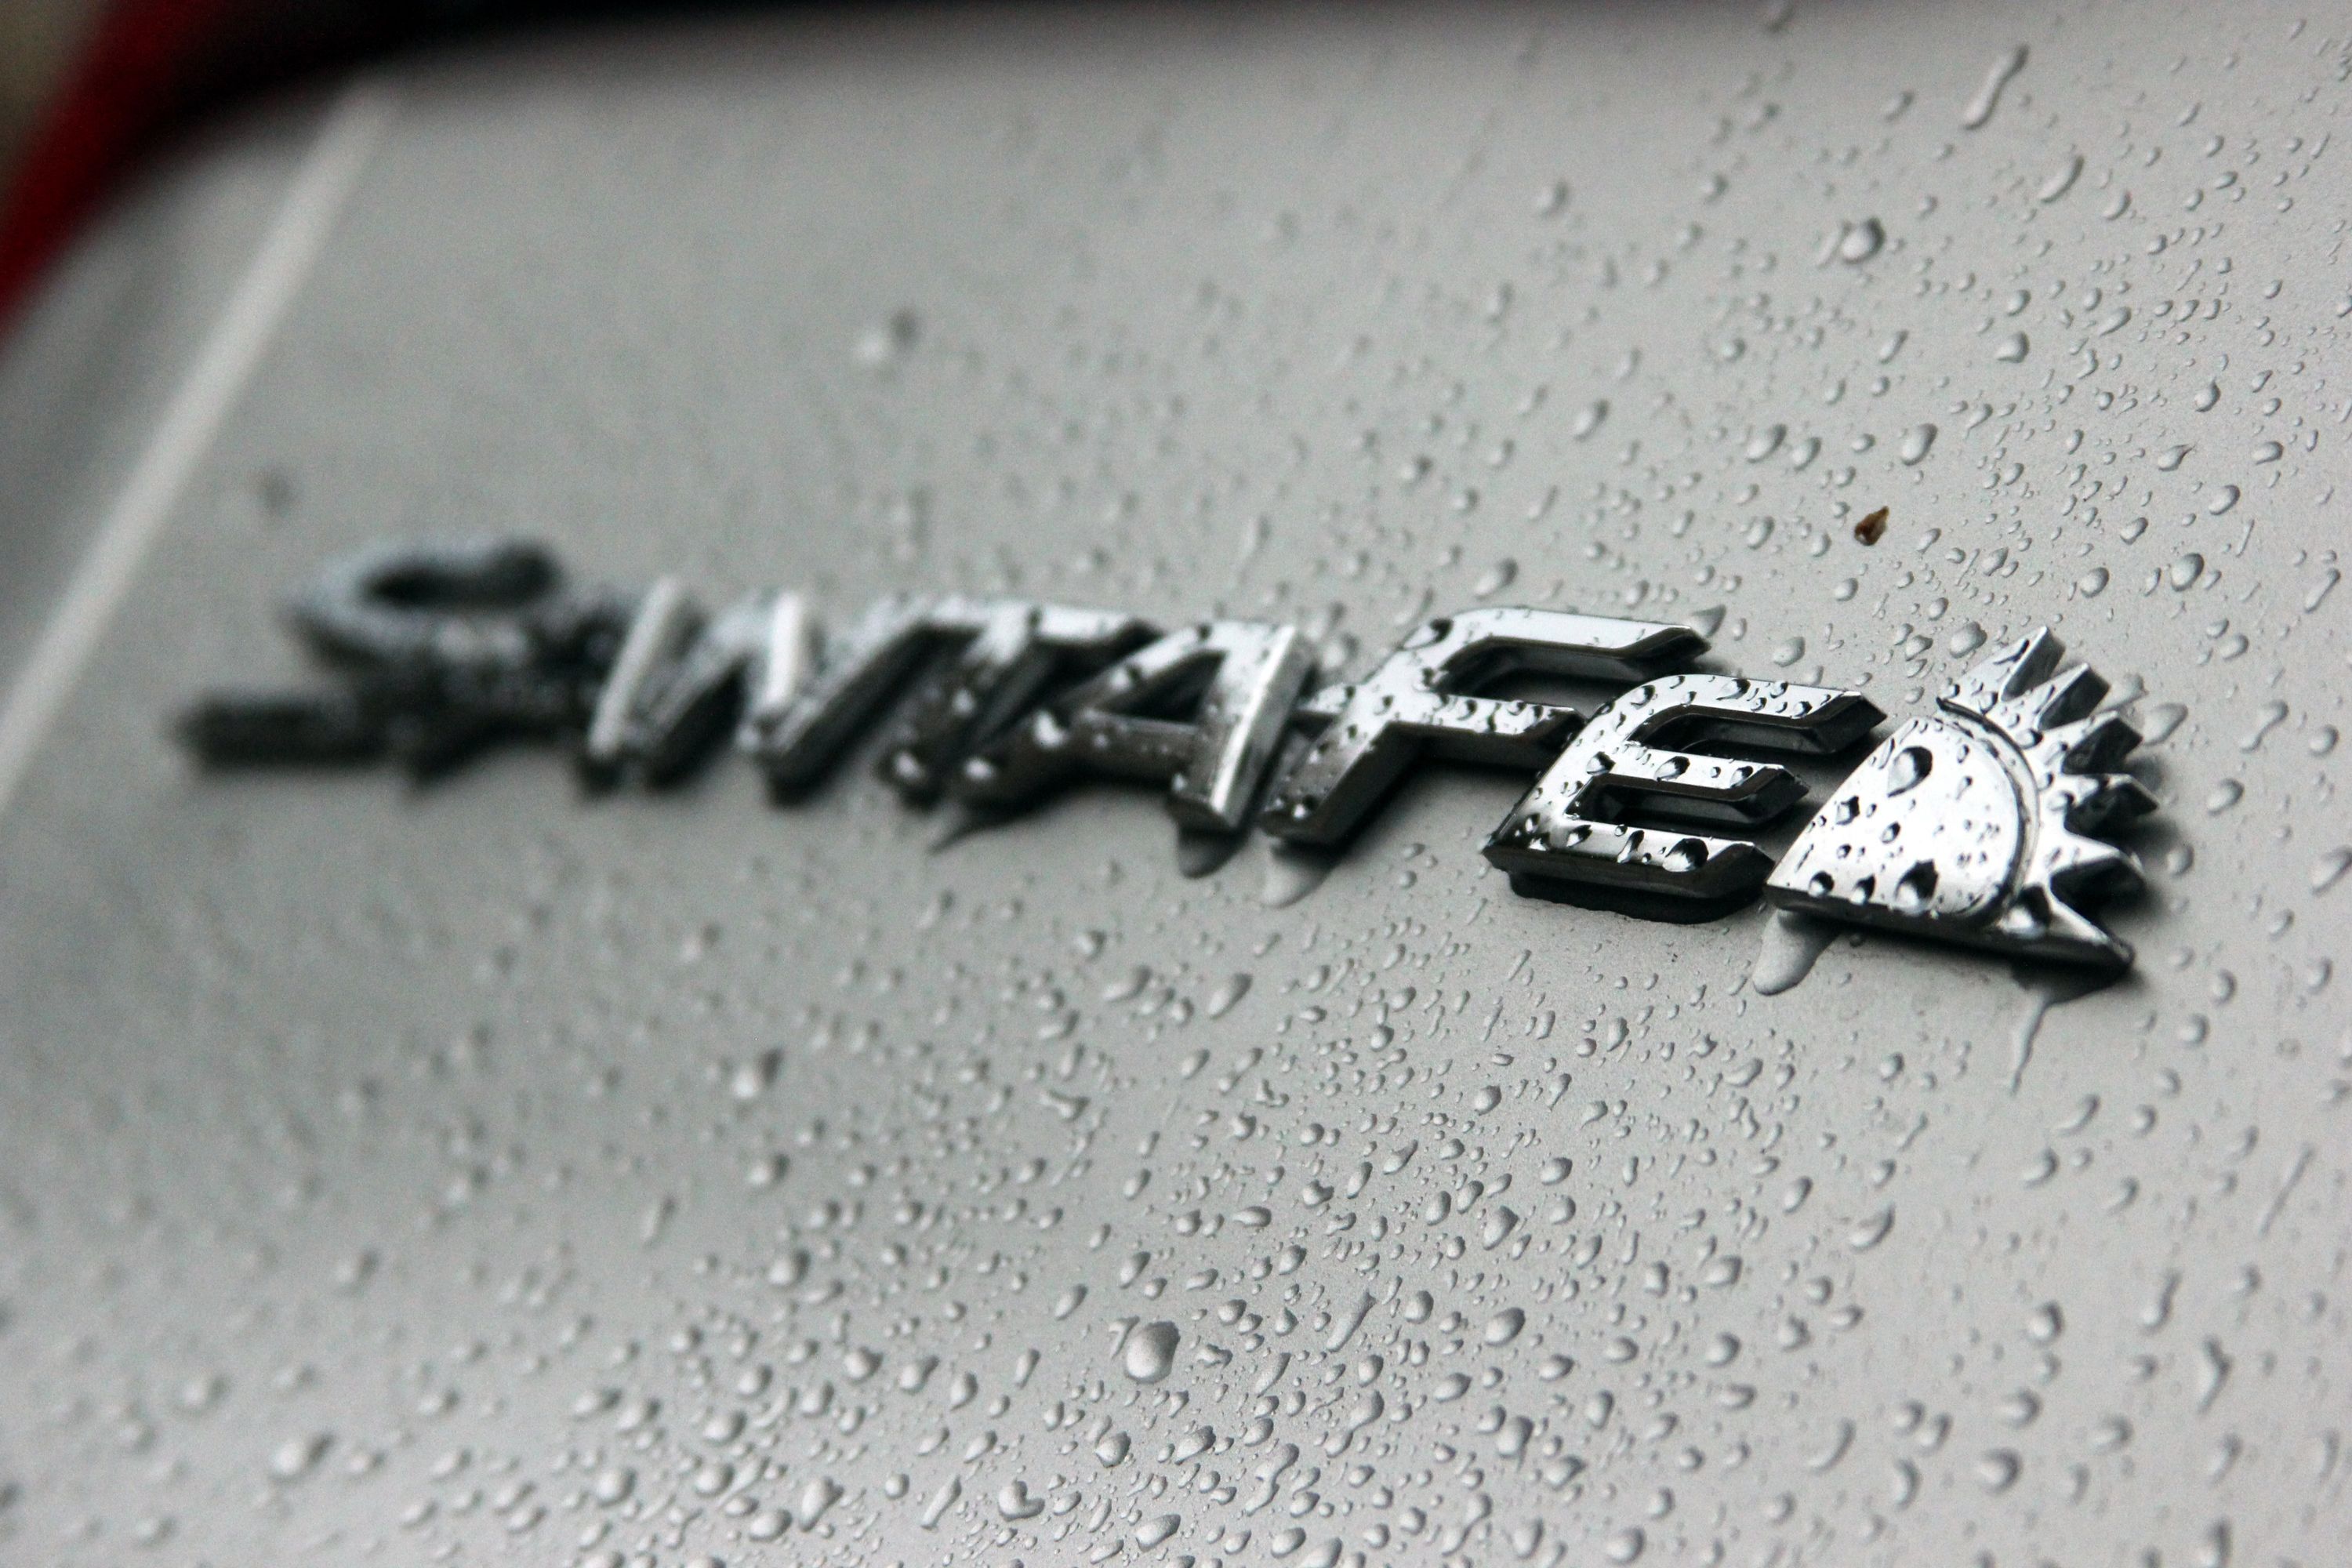 2014 Hyundai Santa Fe Sport - Driven